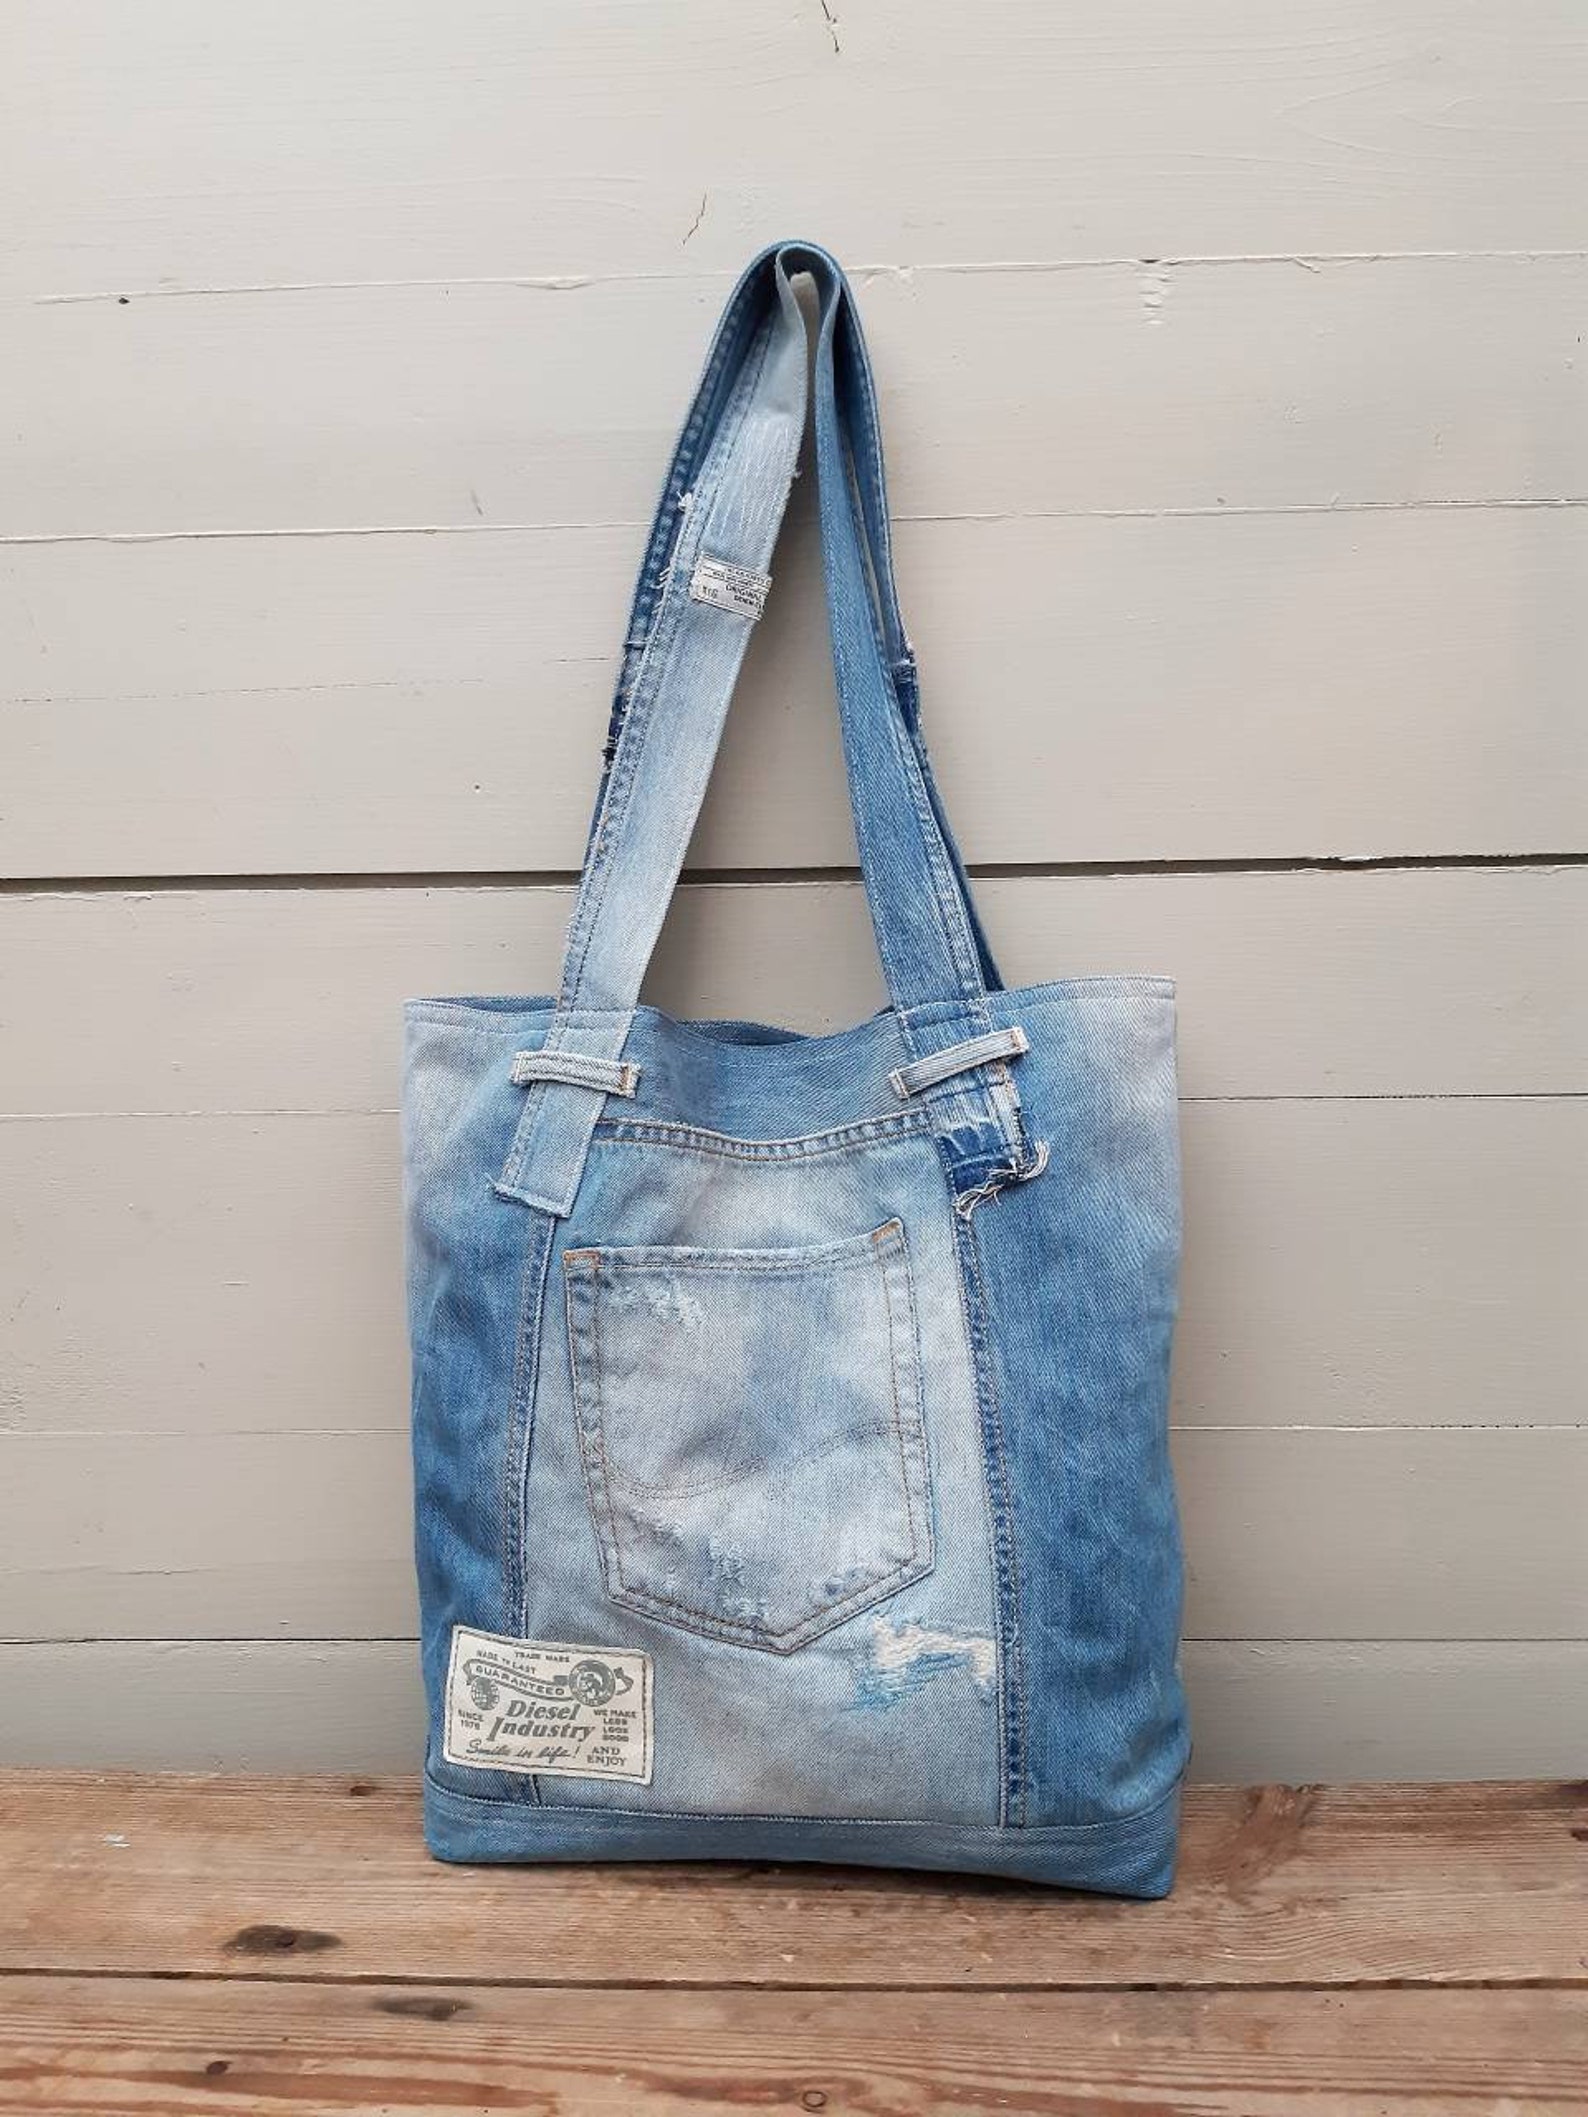 Gstar jeans tote bag with Diesel label denim tote jeans bag | Etsy